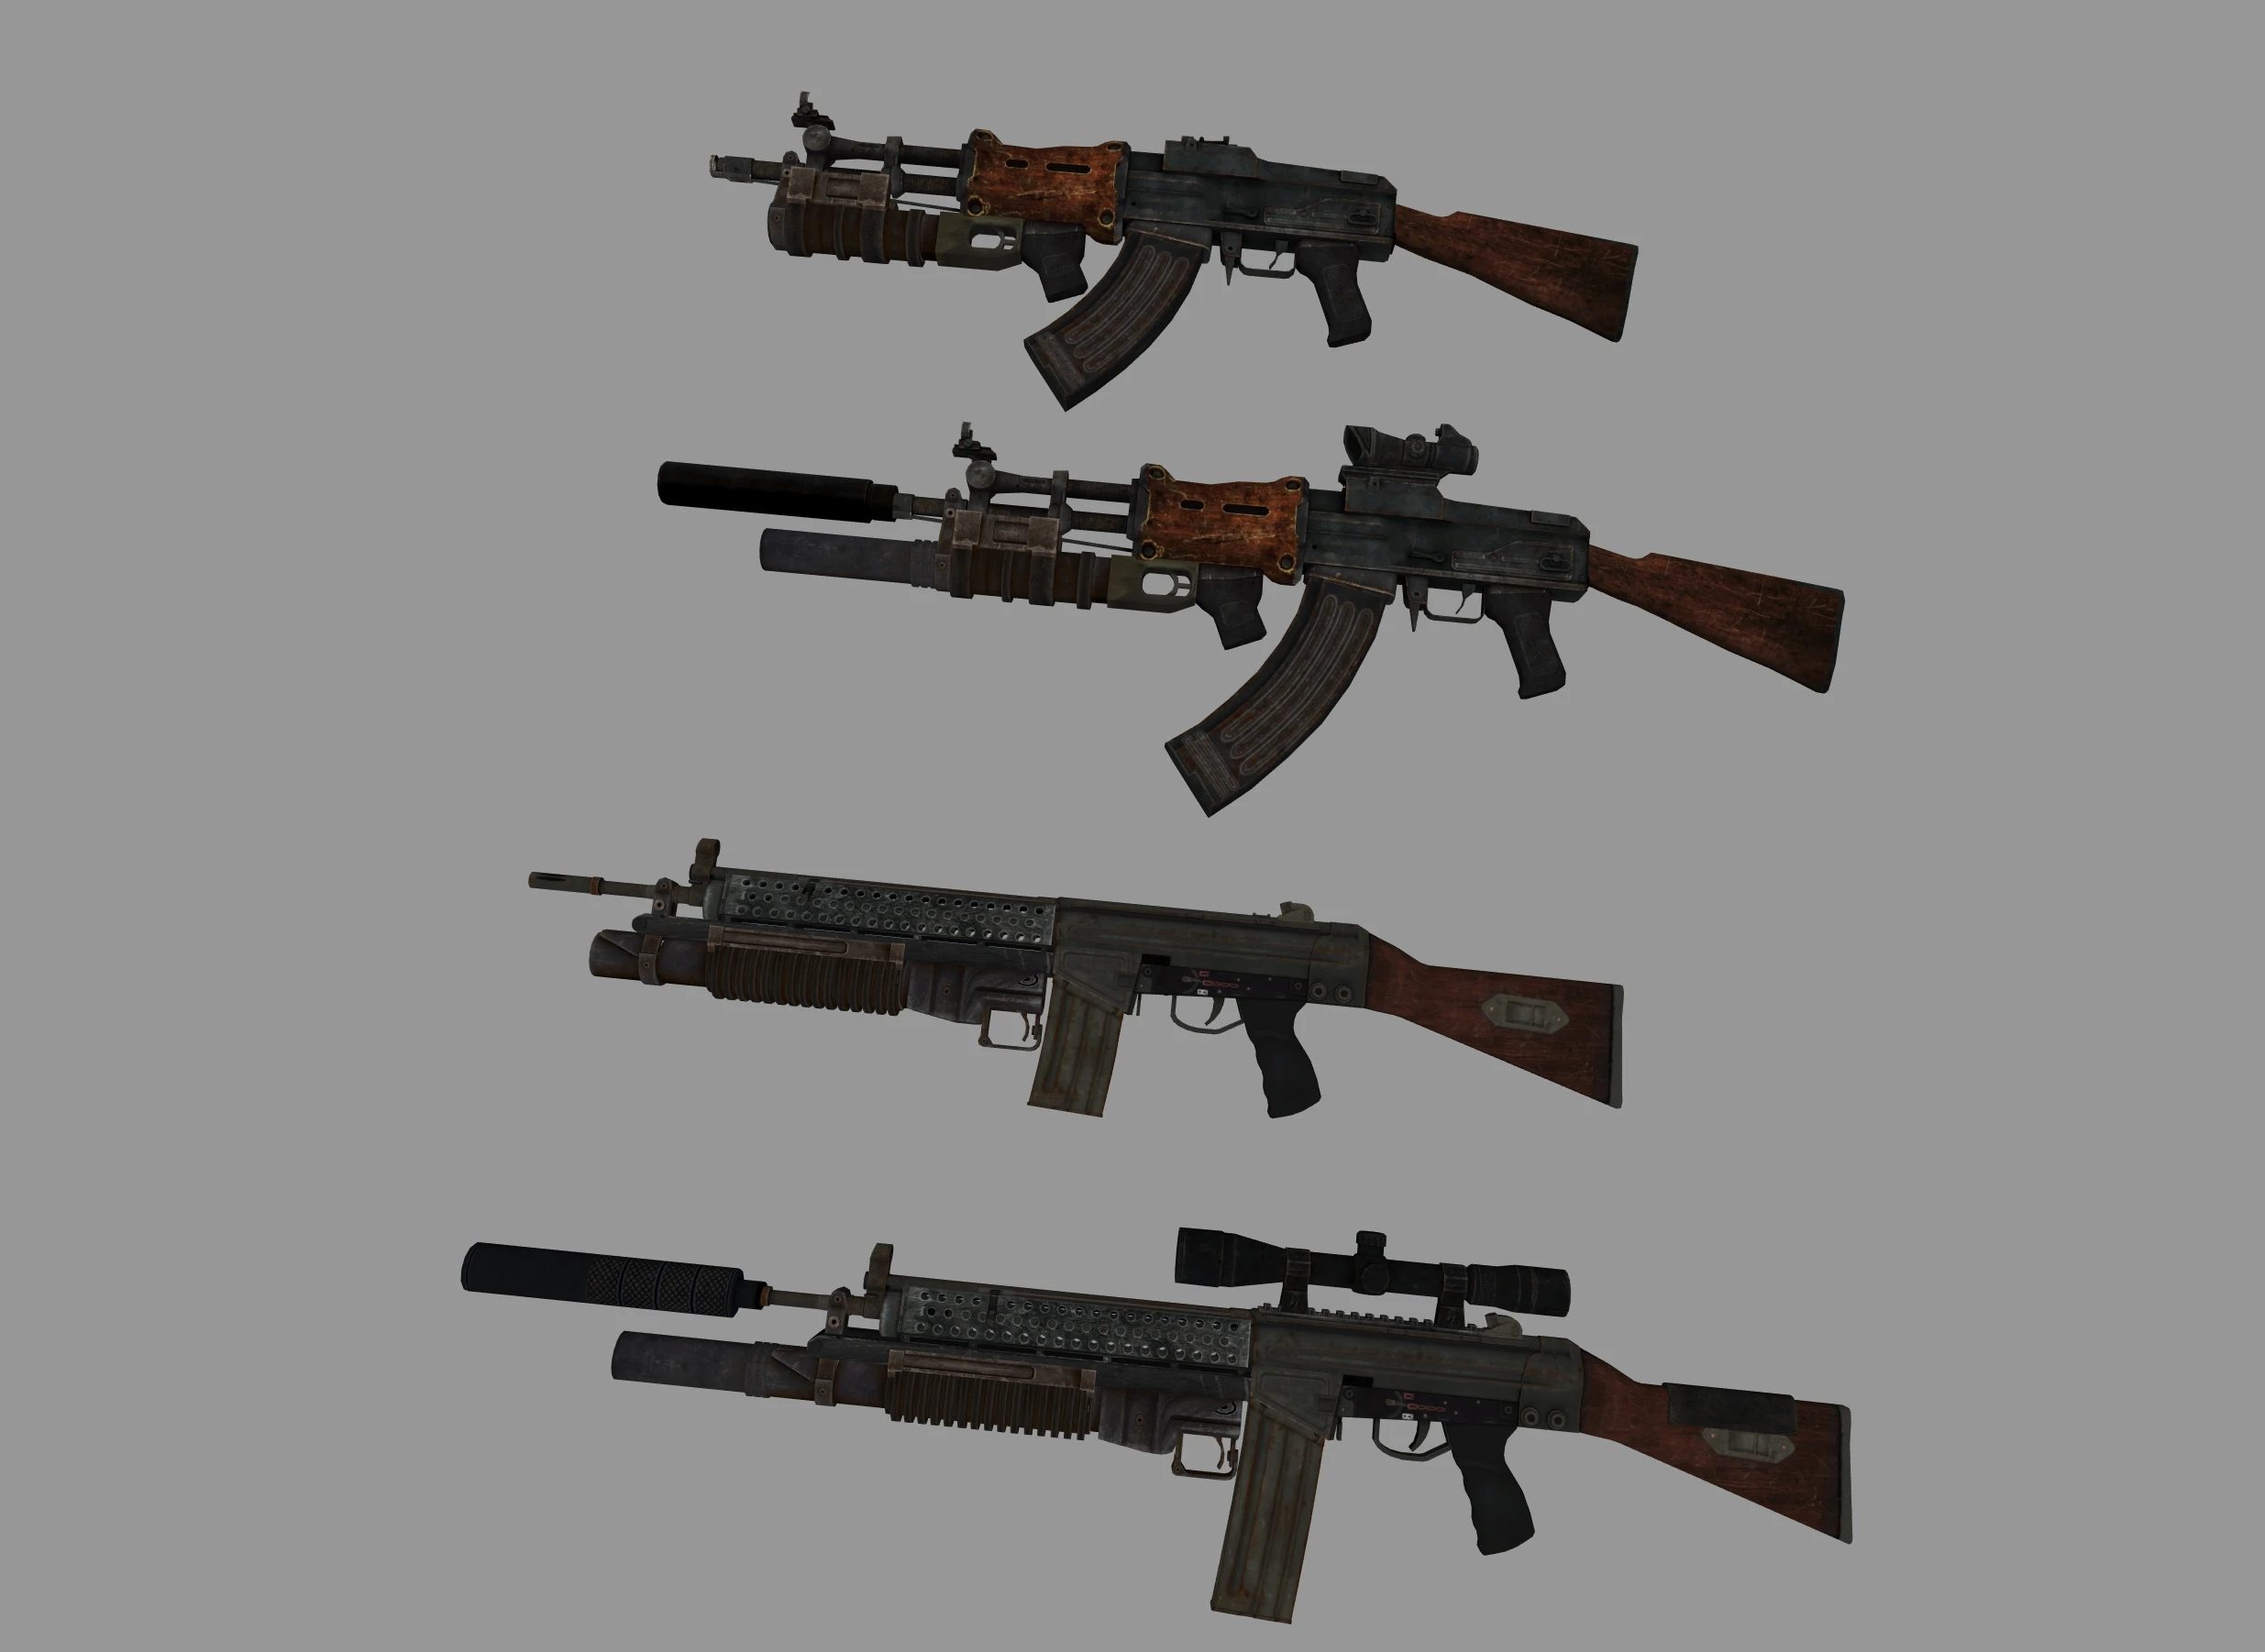 grenade rifle new vegas